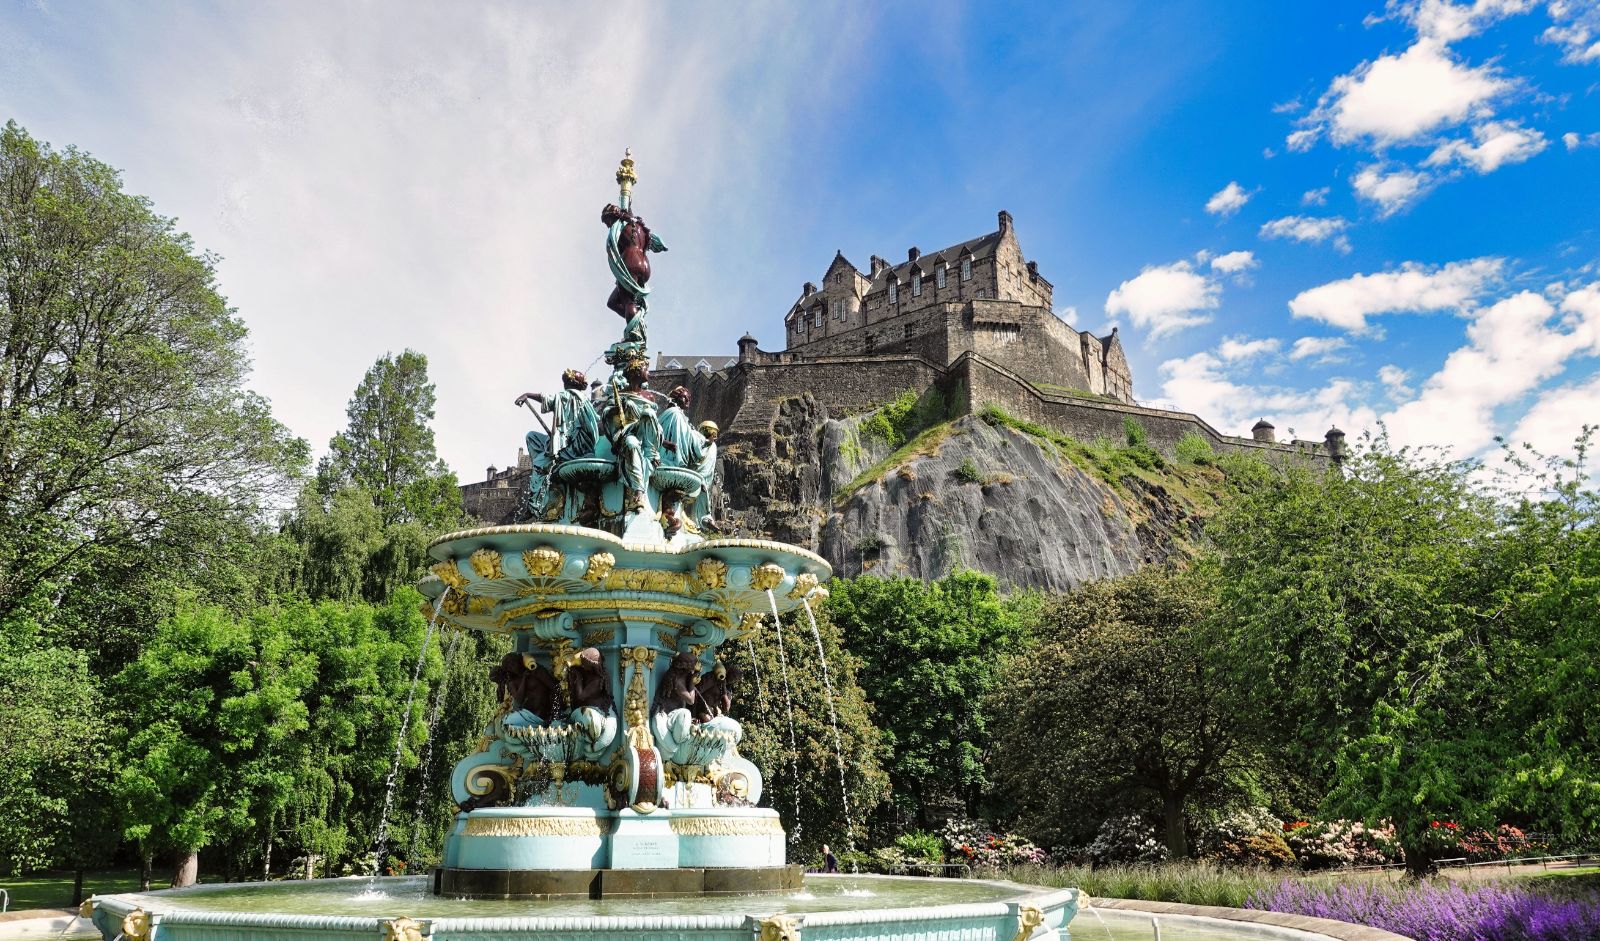 Edinburgh Castle Fountain in Scotland